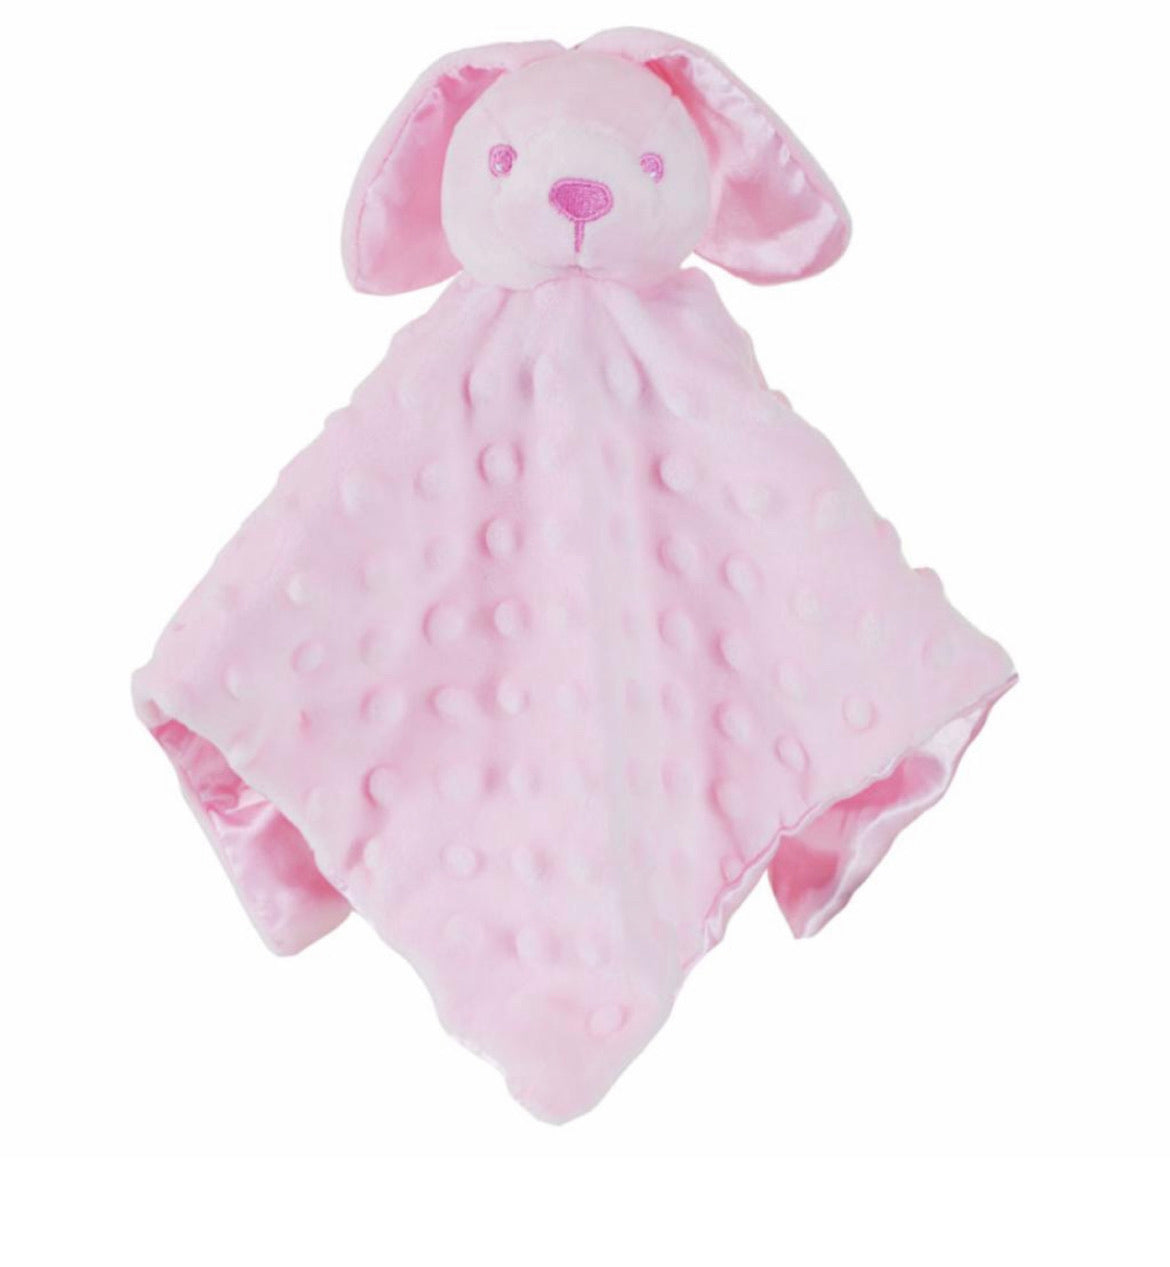 Pink bobble silk back Rabbit comforter - Personalise me